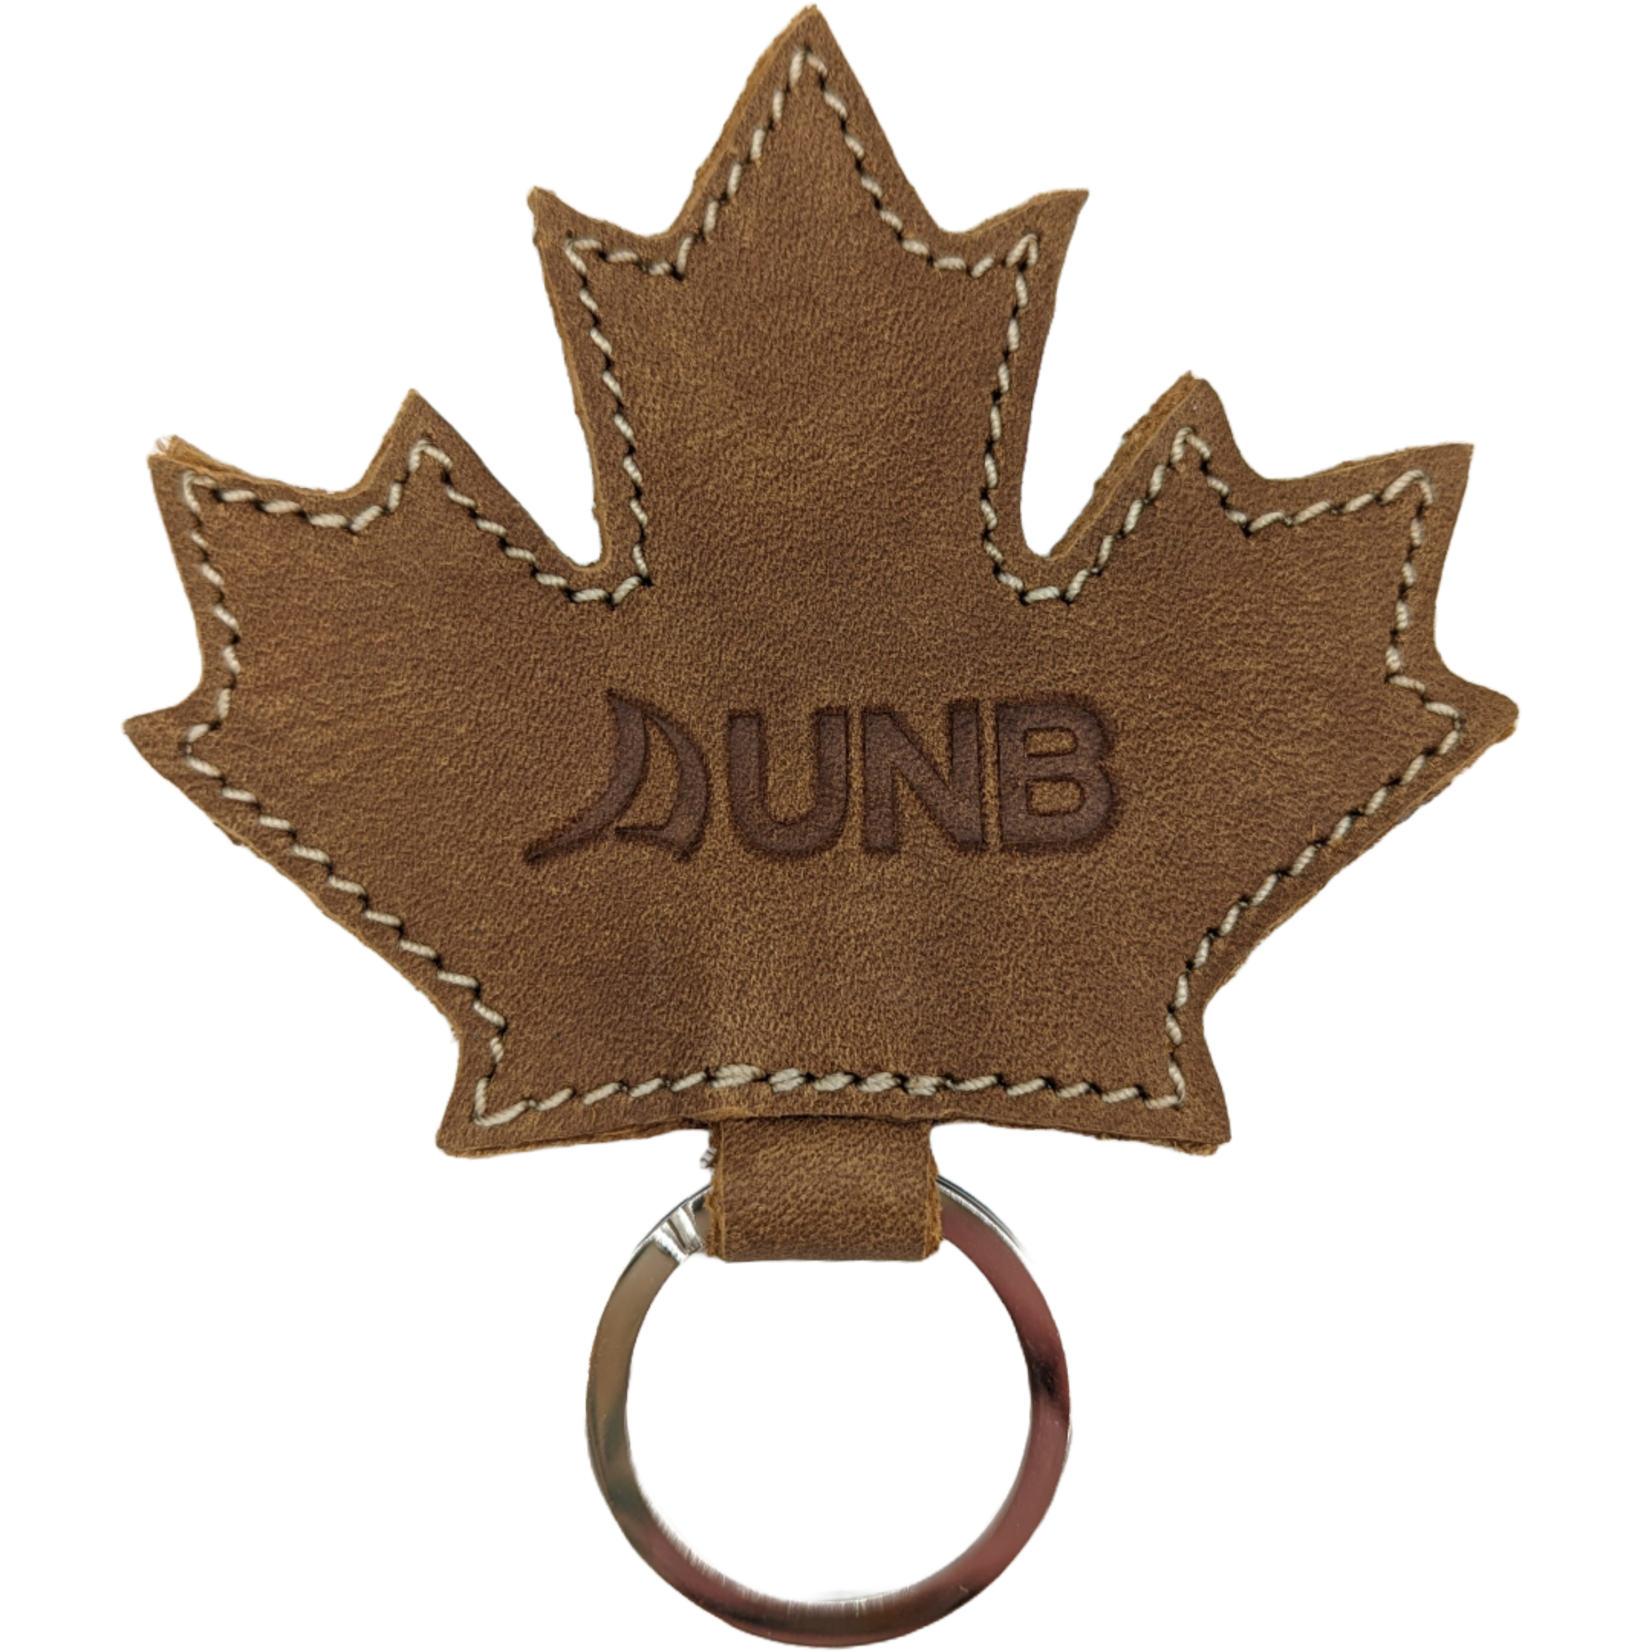 Roots UNB Maple Leaf Key Ring